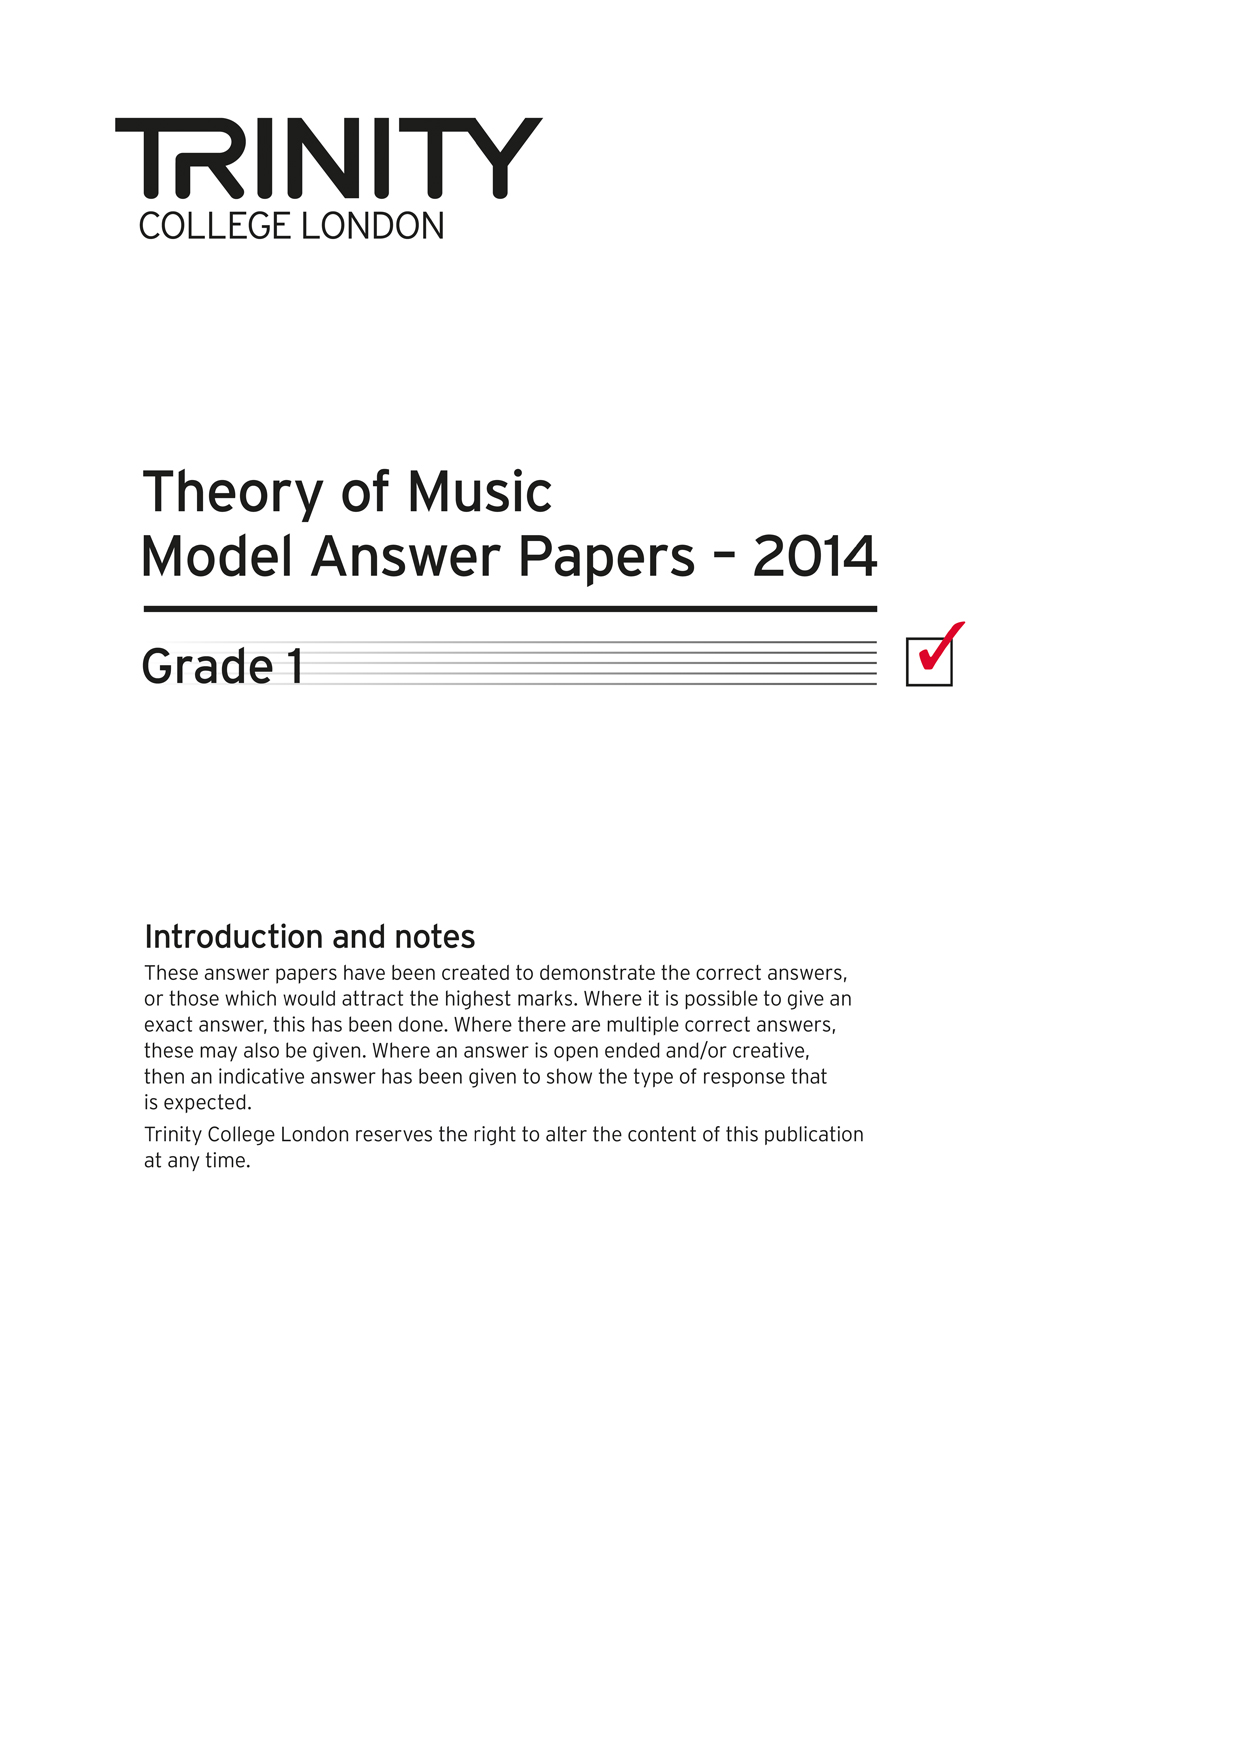 Theory Model Answers 2014 - Grade 1: Theory